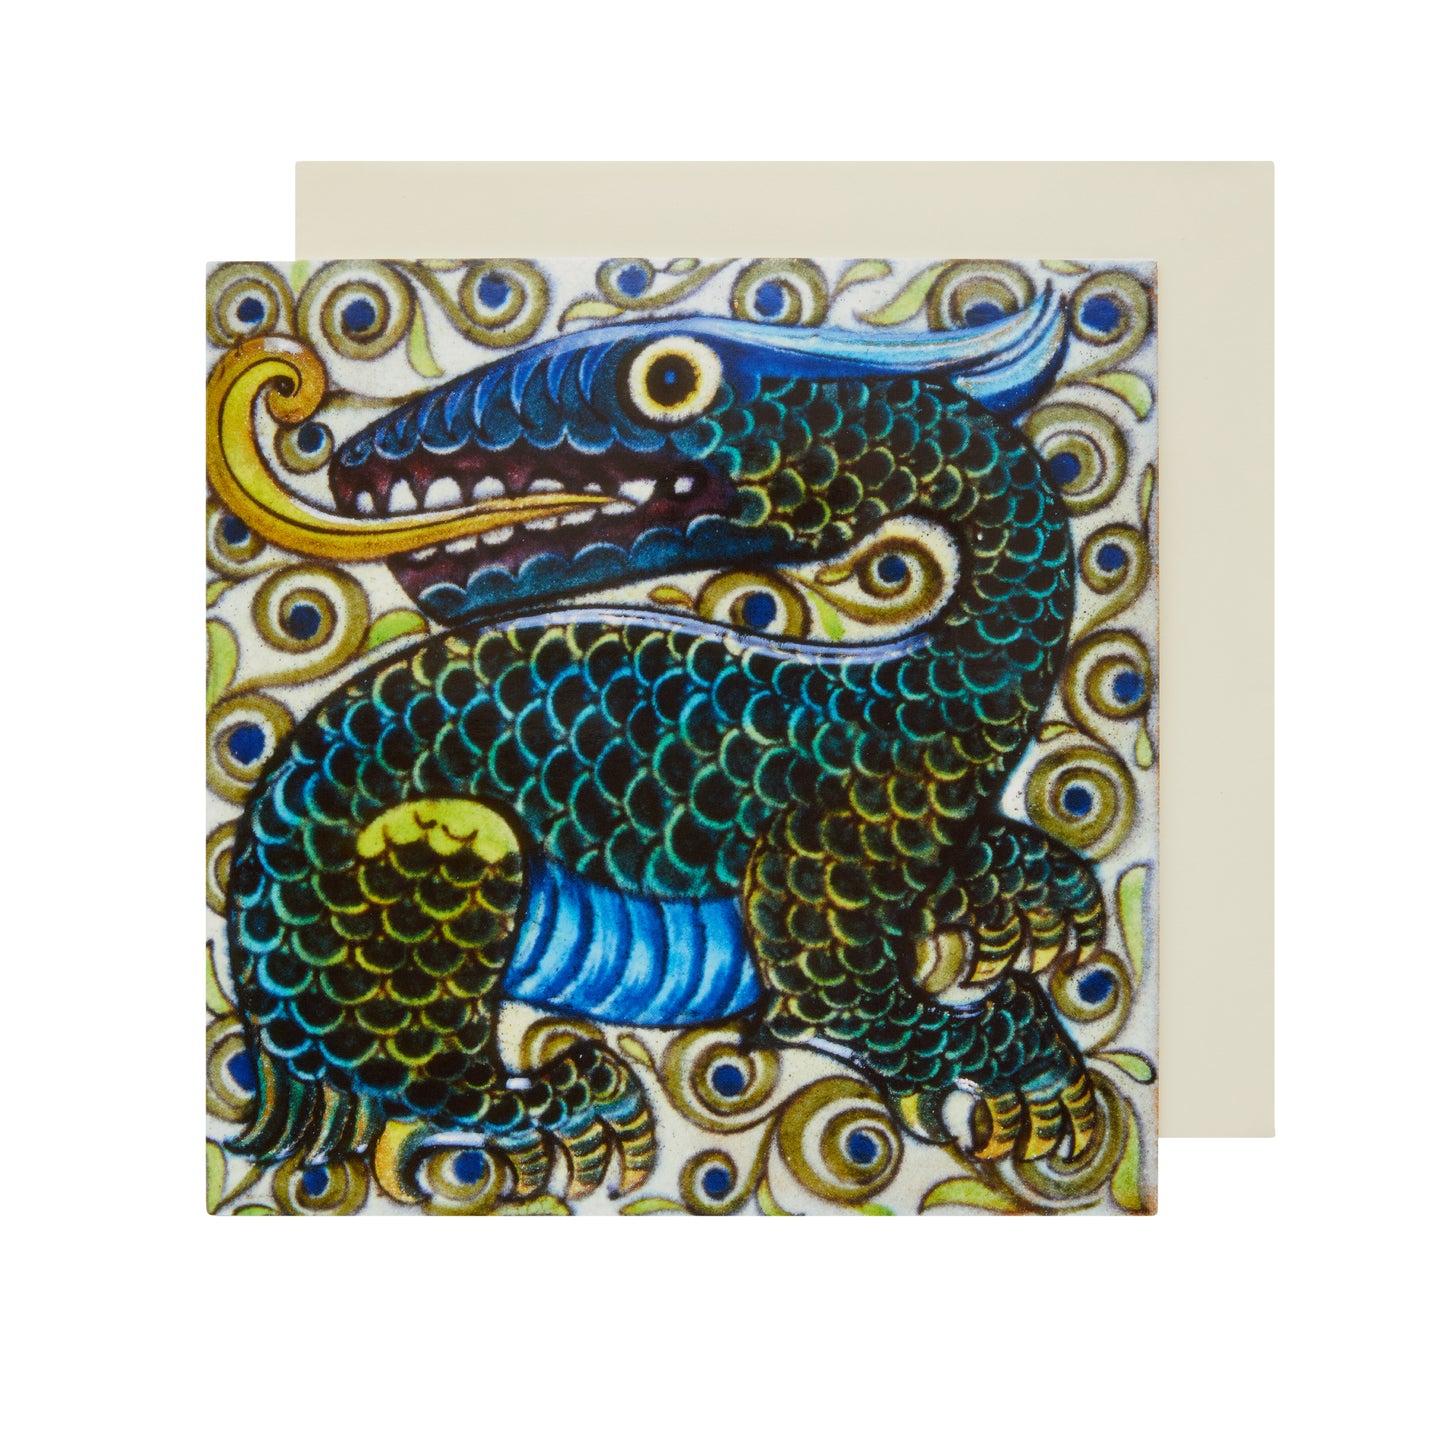 Green Dragon Tile - Greetings card